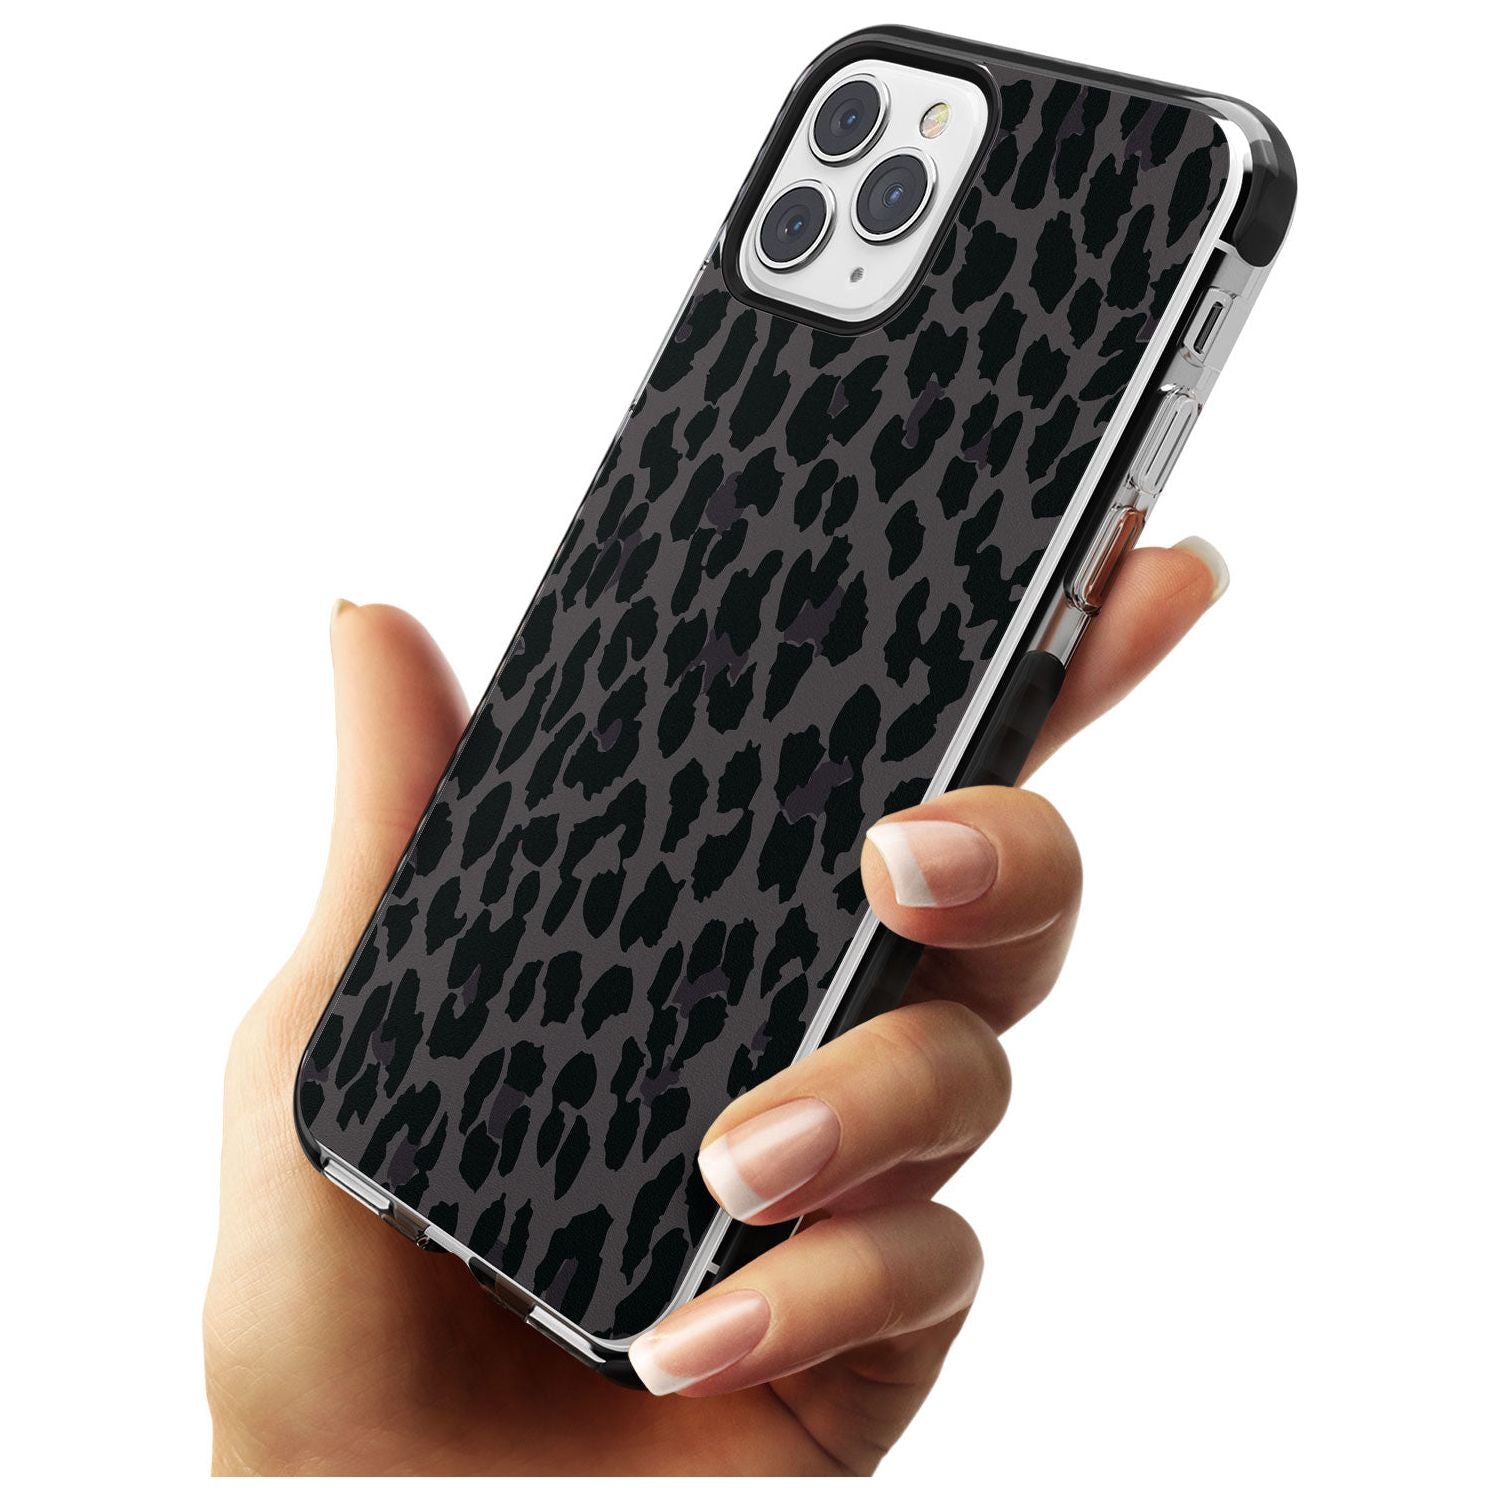 Dark Animal Print Pattern Large Leopard Black Impact Phone Case for iPhone 11 Pro Max